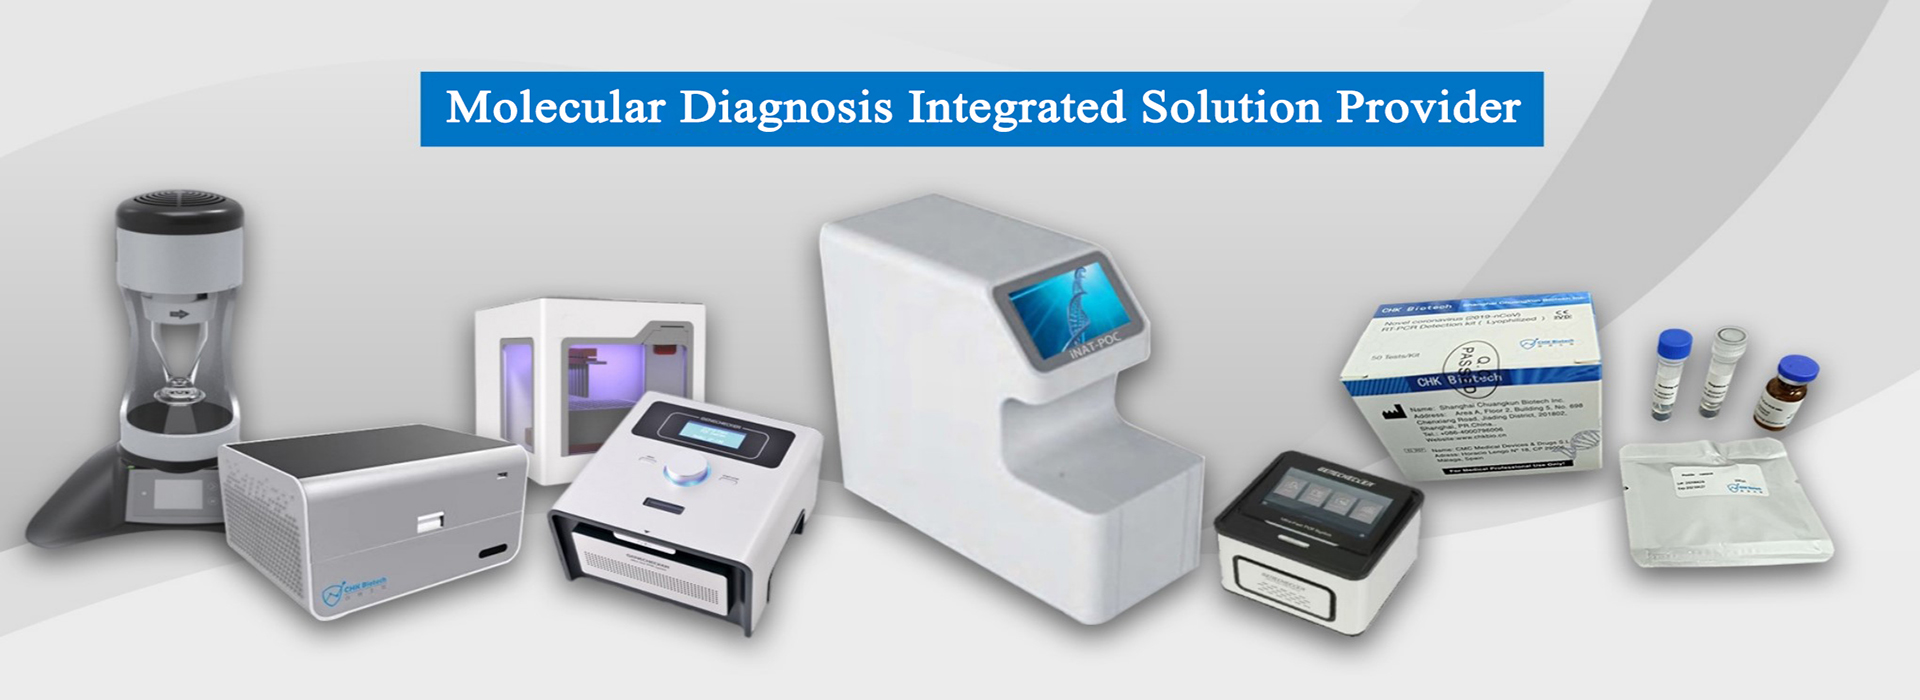 Molecular Diagnosis Integrated Solution Provider